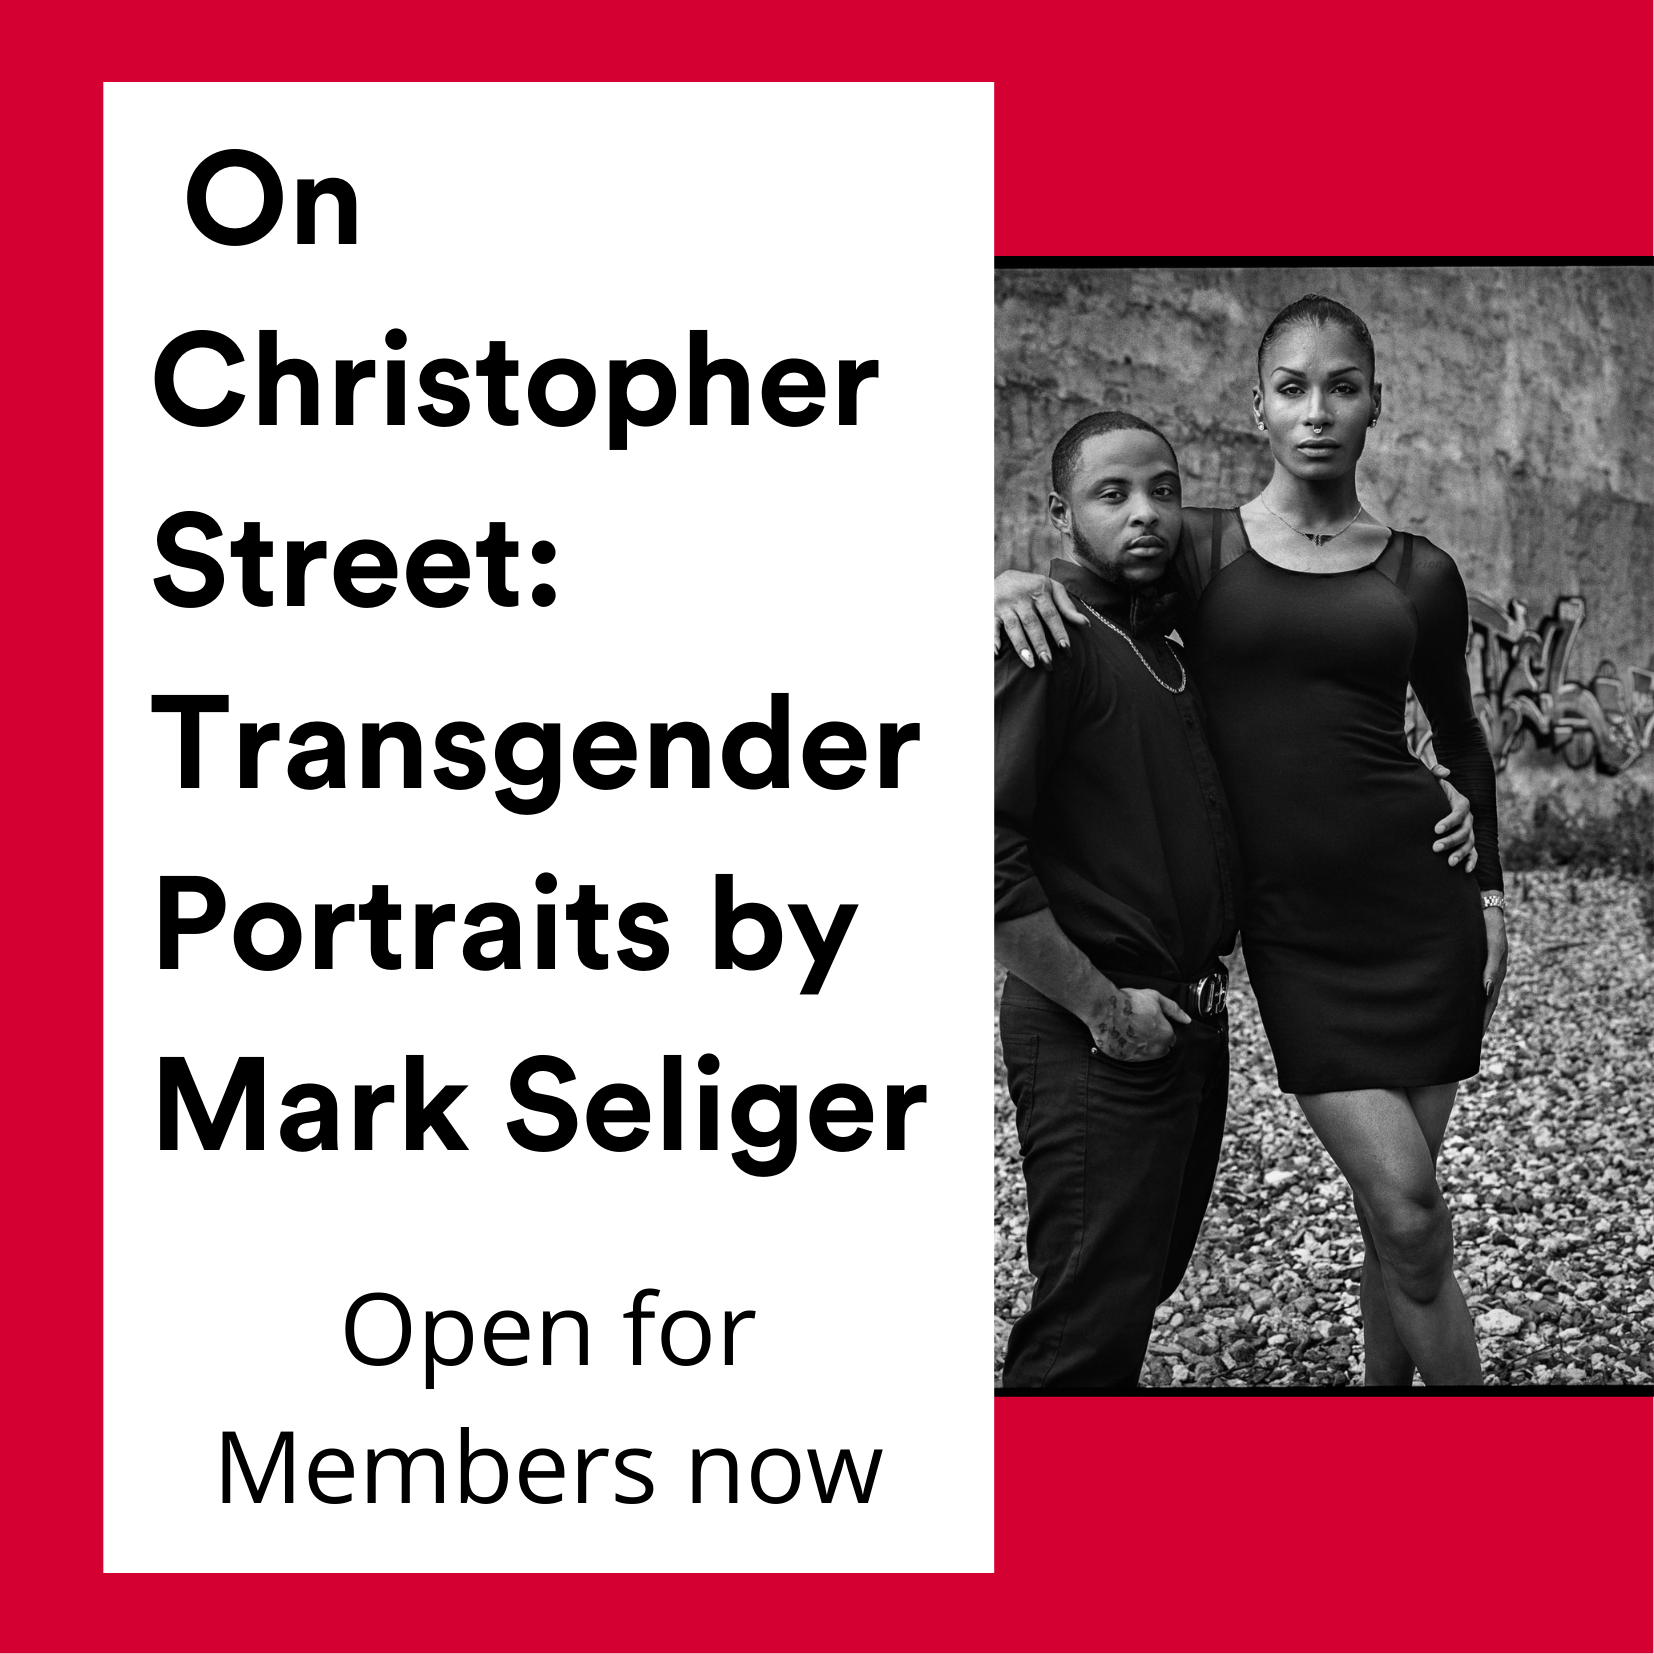 At the Brooks: On Christopher Street: Transgender Portraits by Mark Seliger